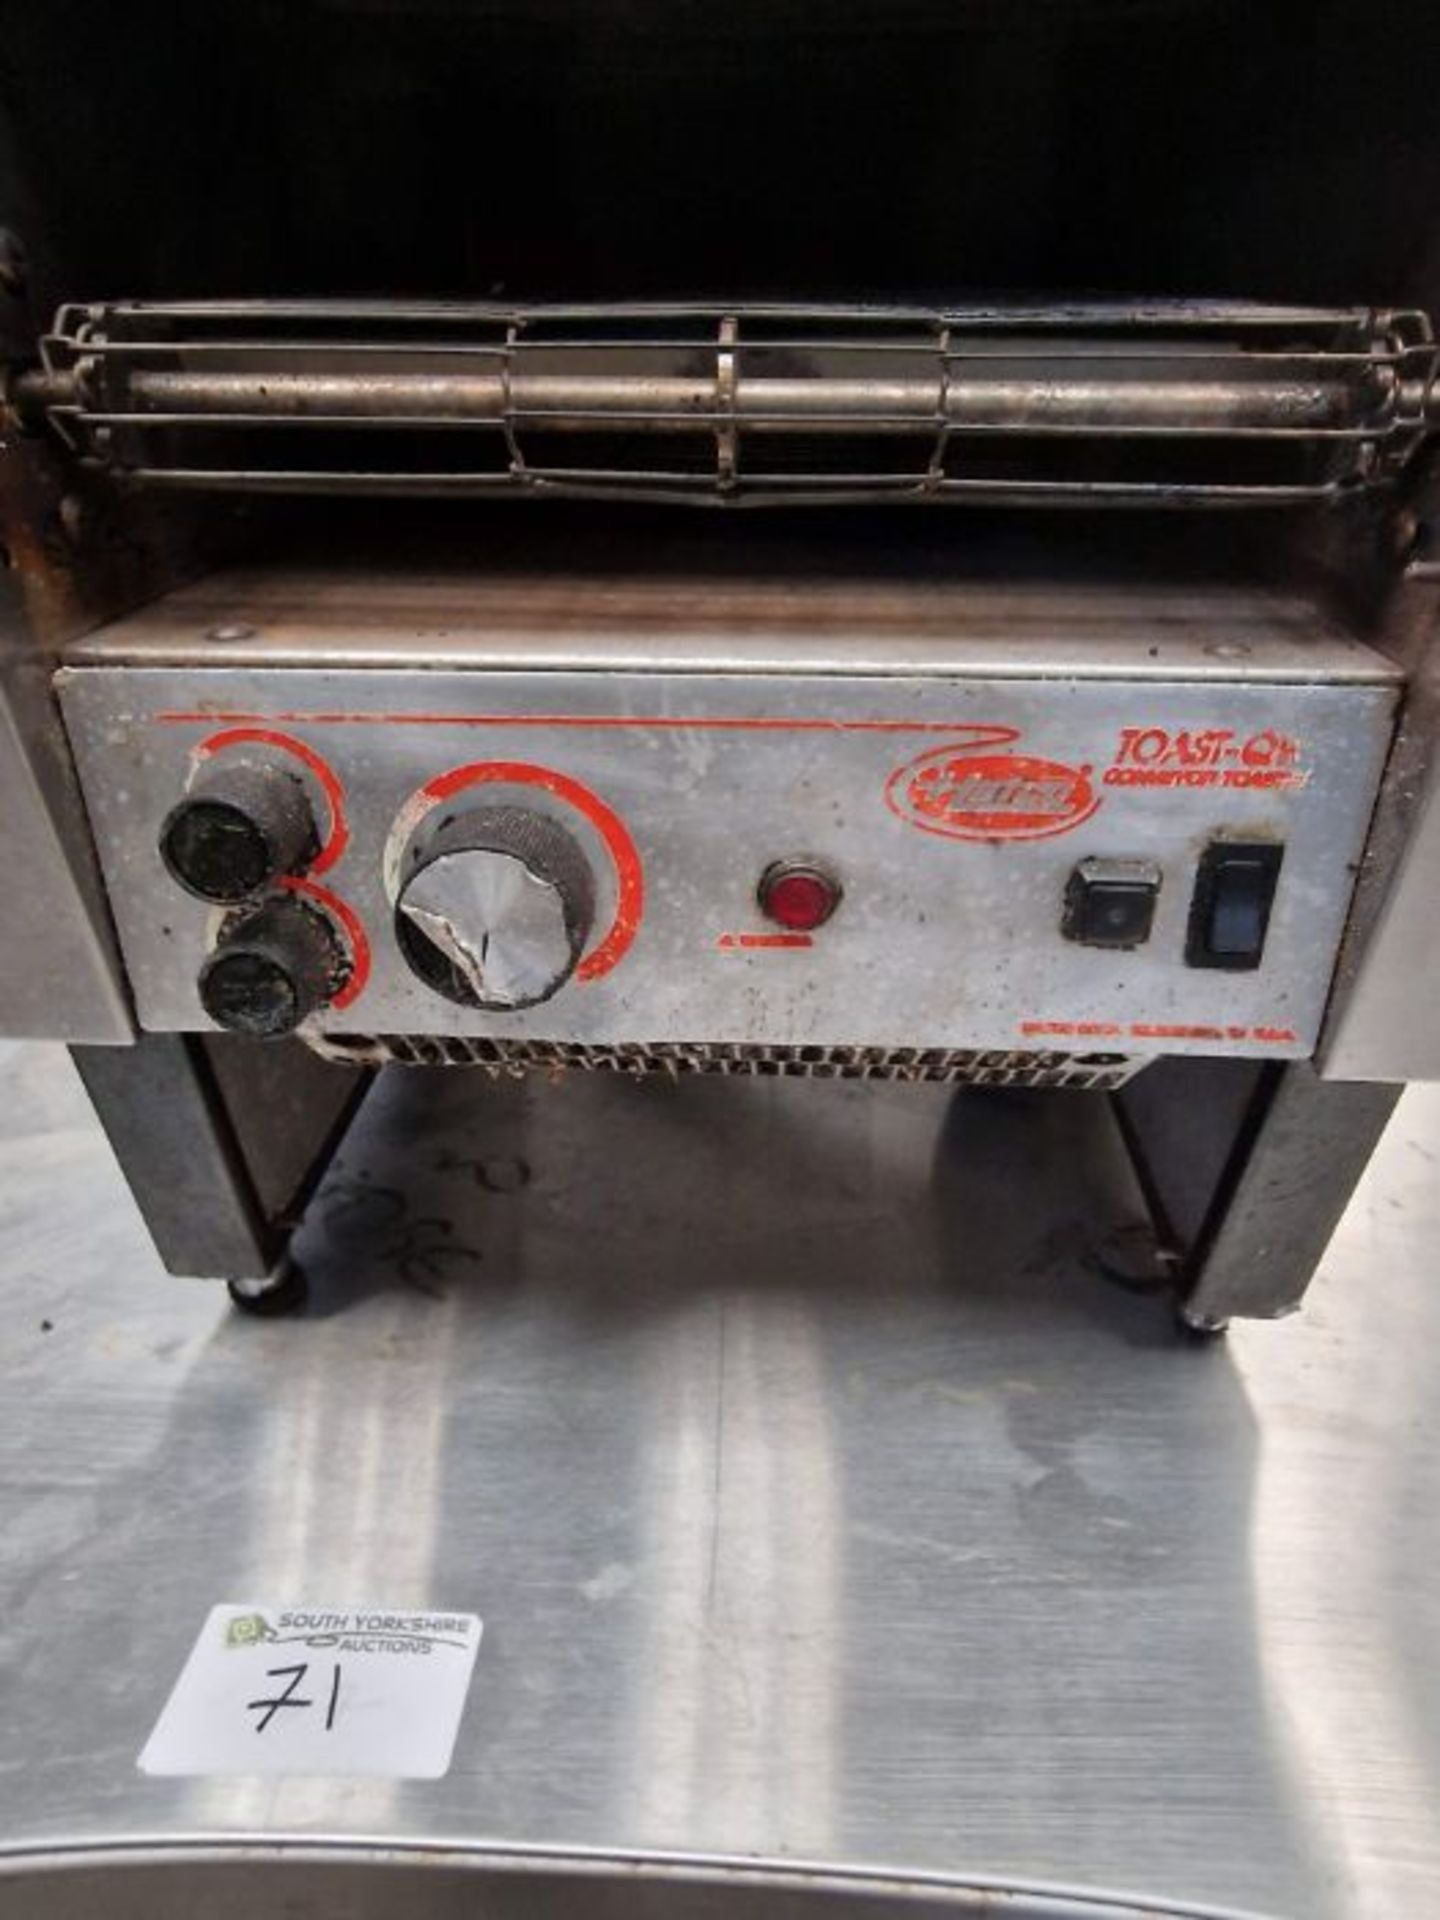 Toastkwik conveyer toaster. - Image 2 of 2